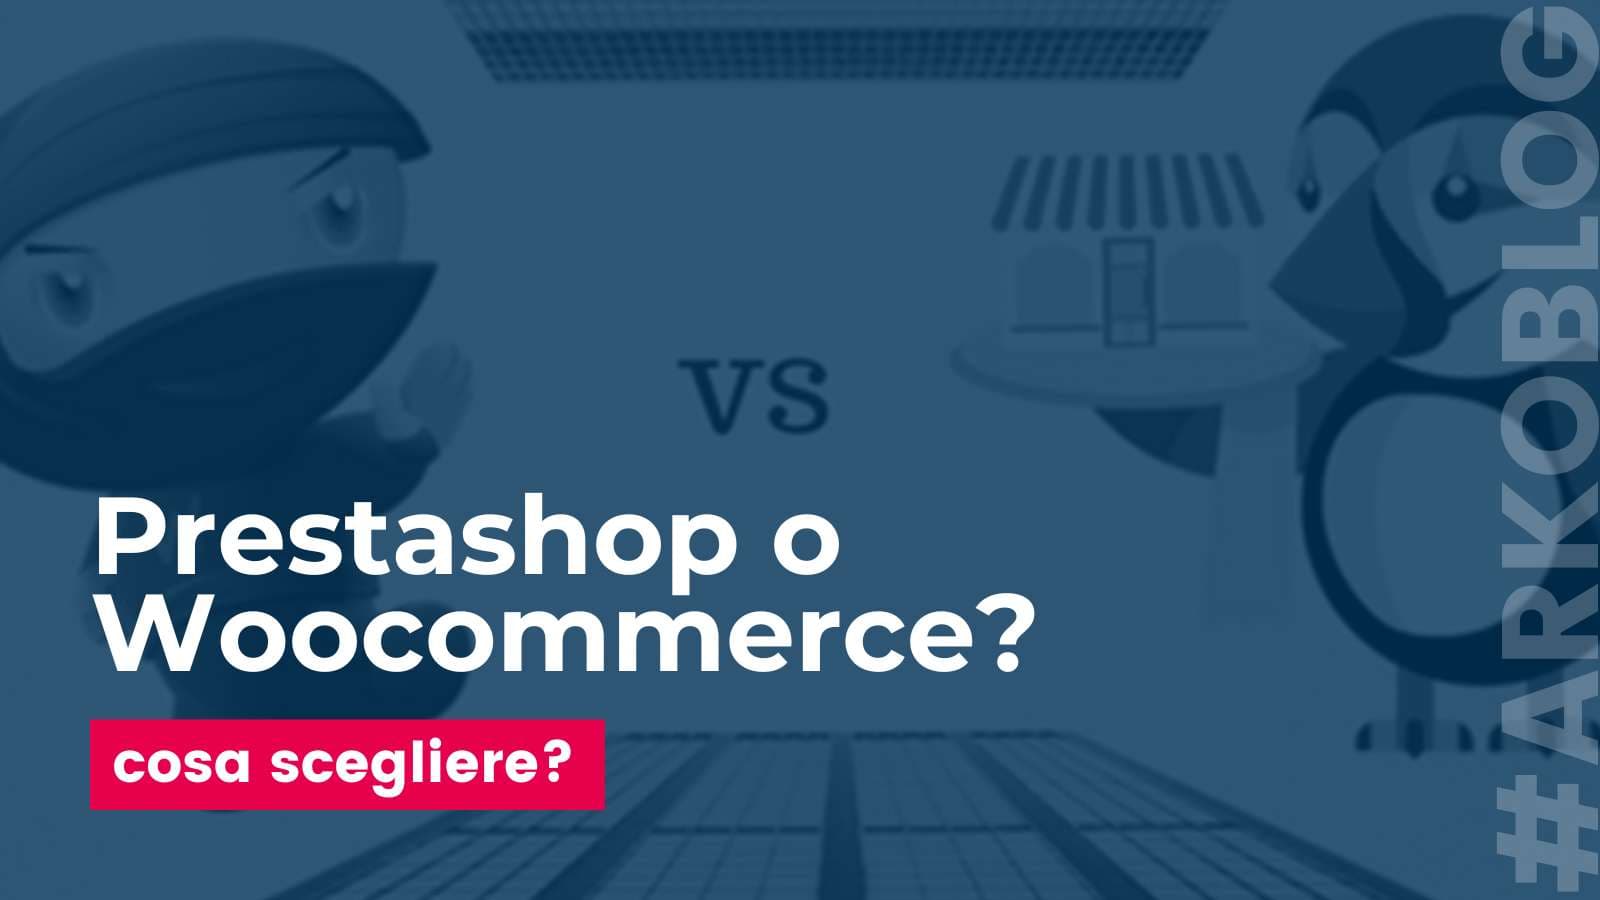 E-commerce con Prestashop oppure scelgo WooCommerce ?